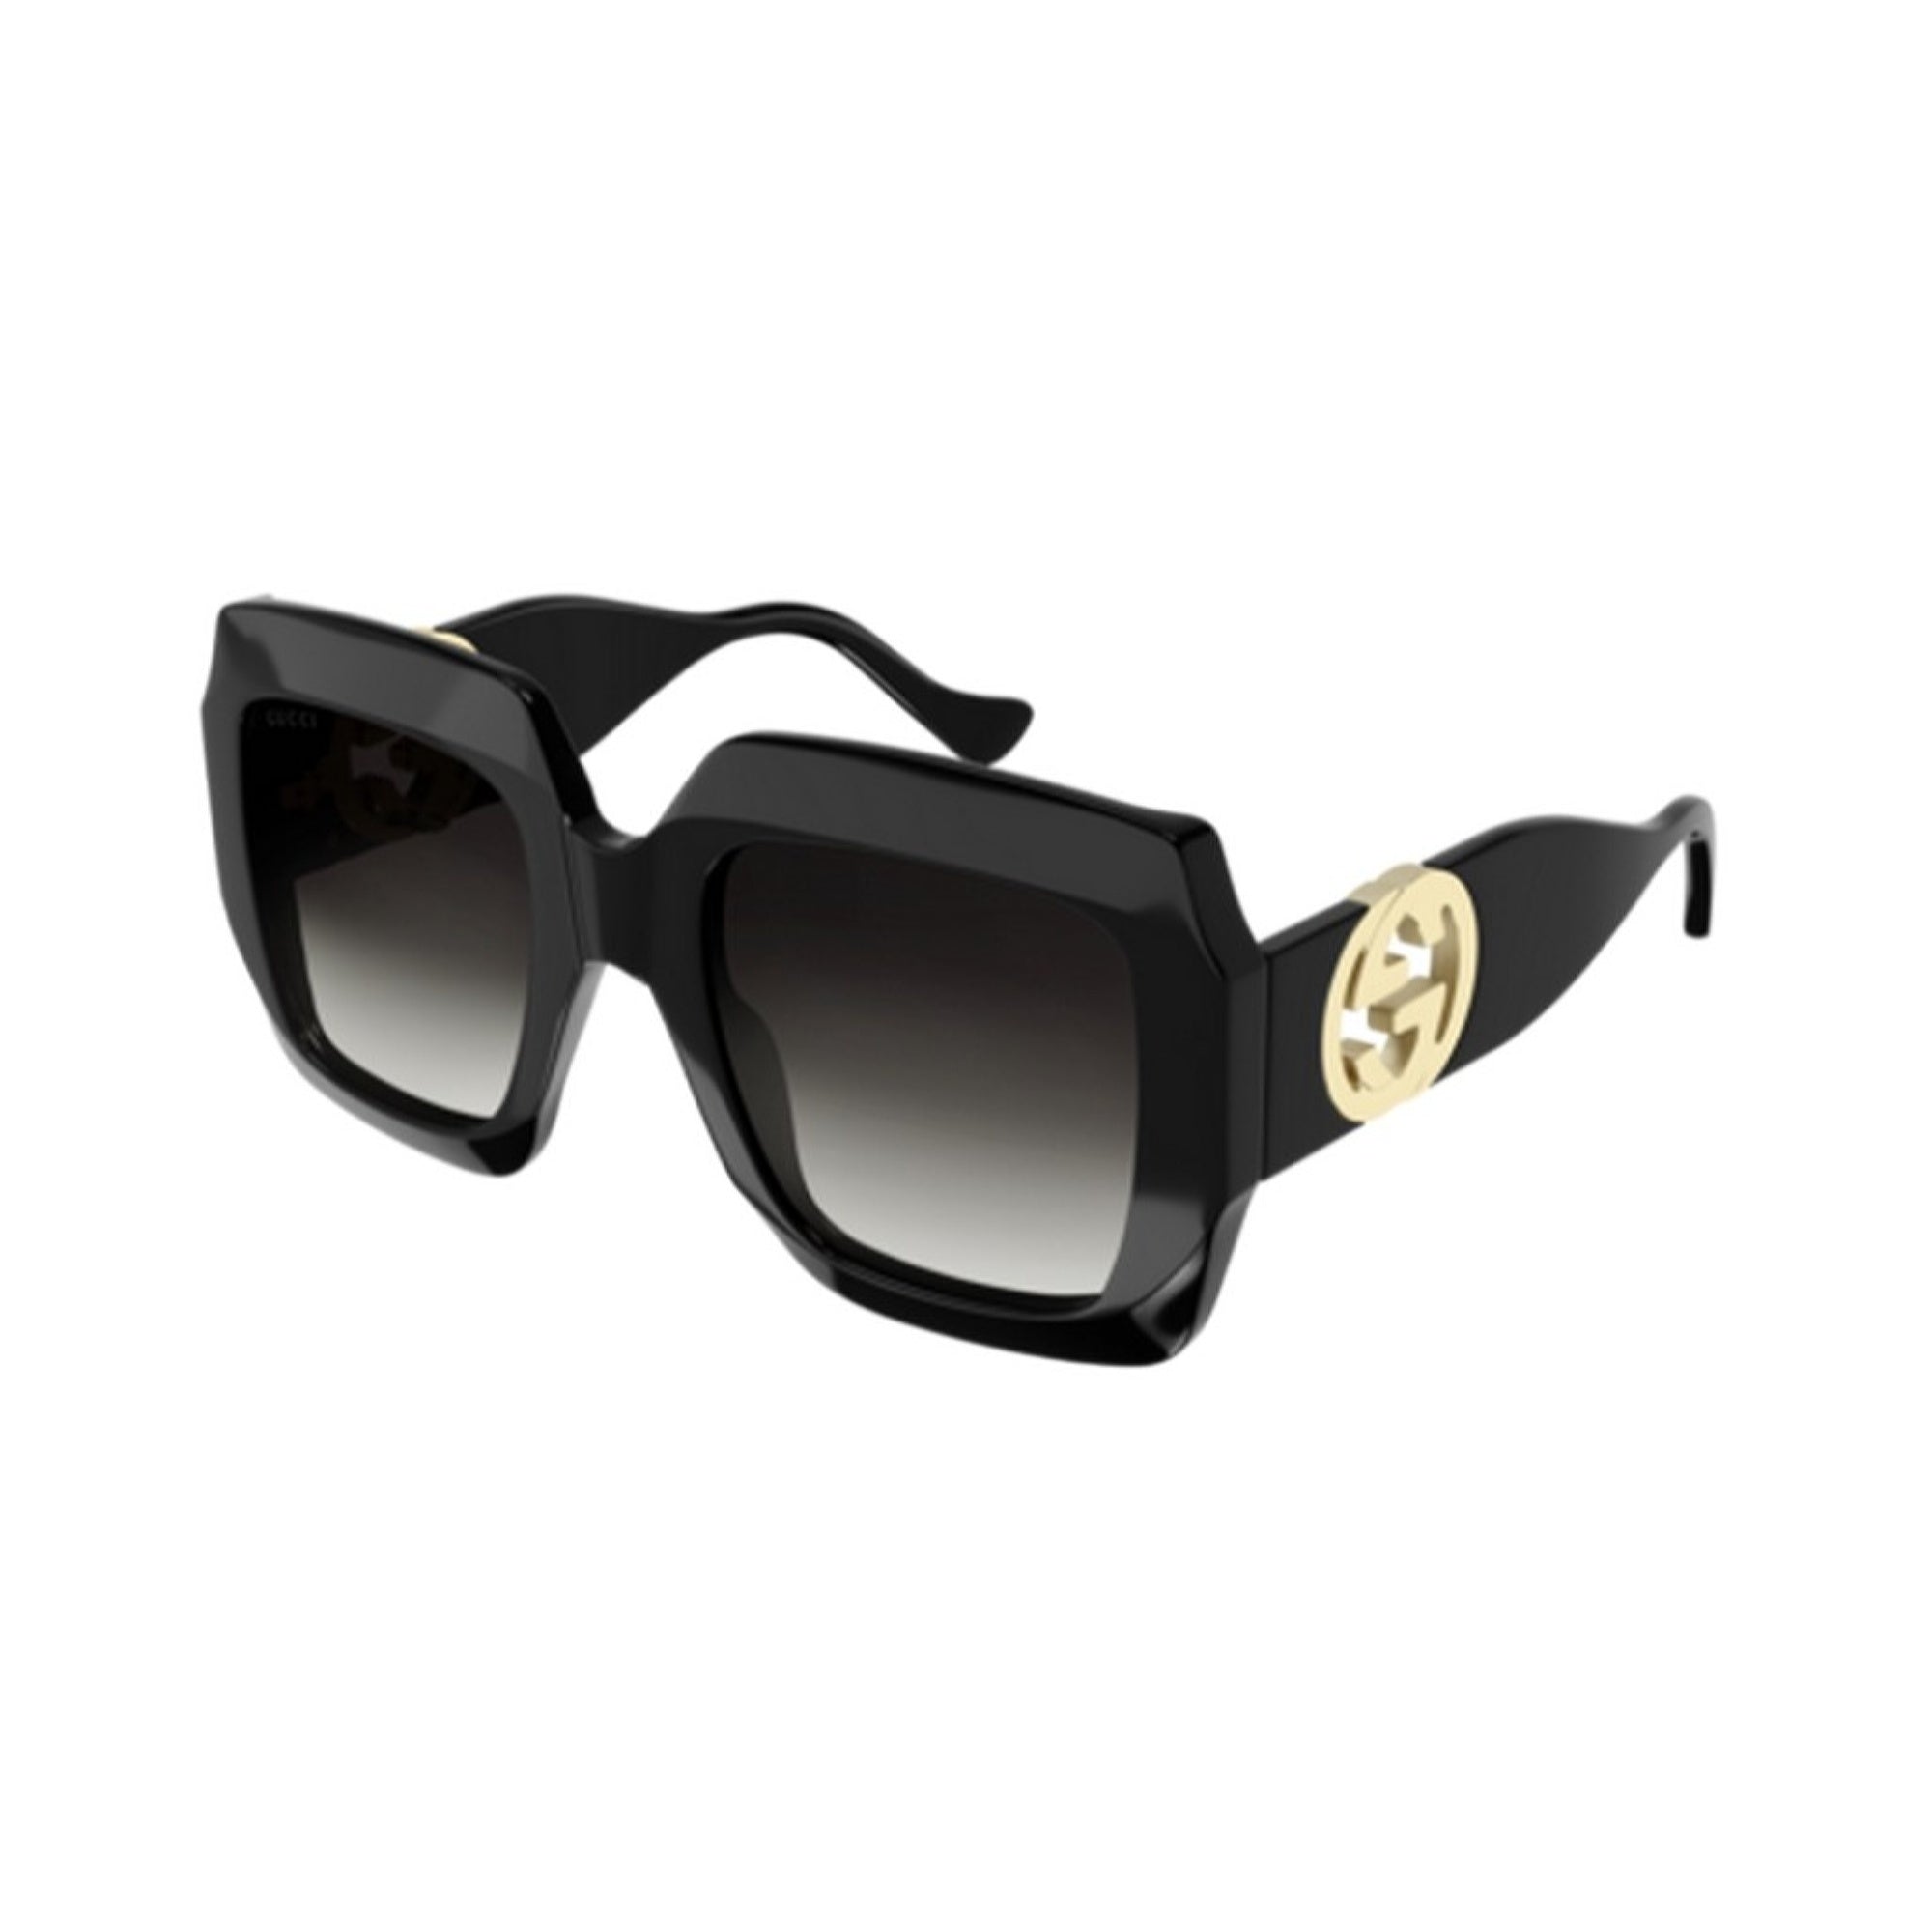 Buy Gucci Novelty women's Sunglasses GG0772S-30008963005 - Ashford.com